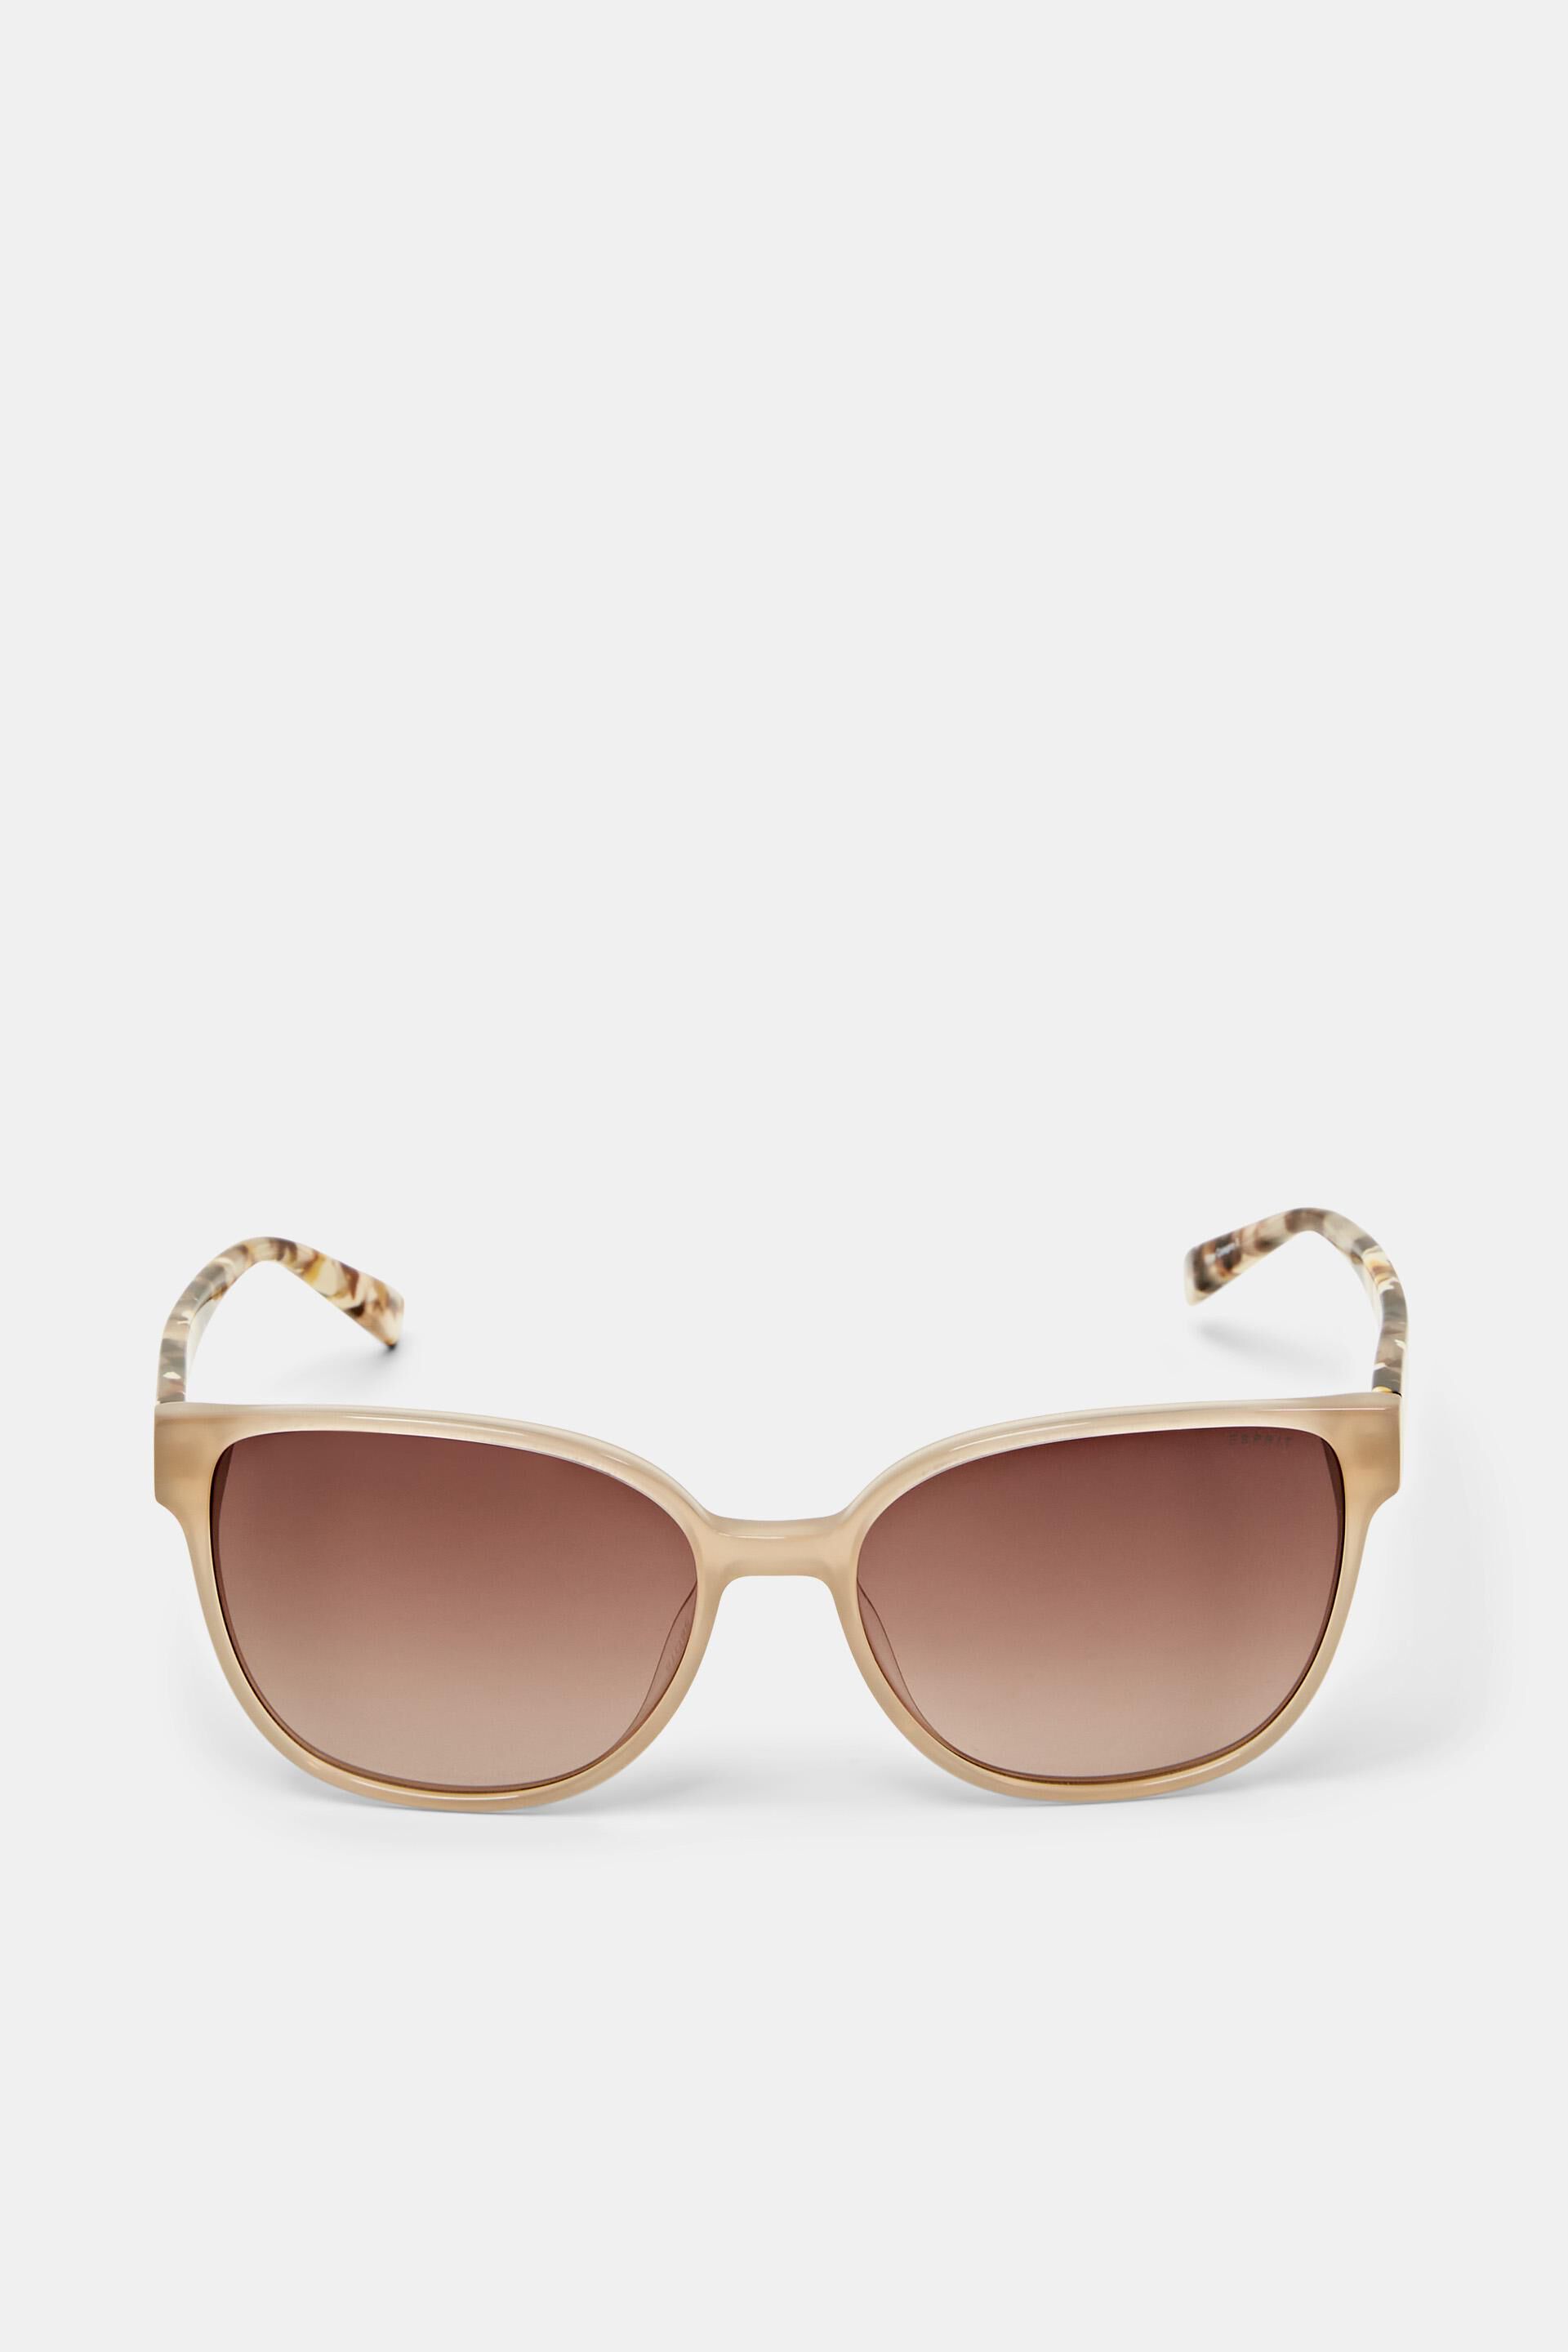 Esprit framed Square sunglasses